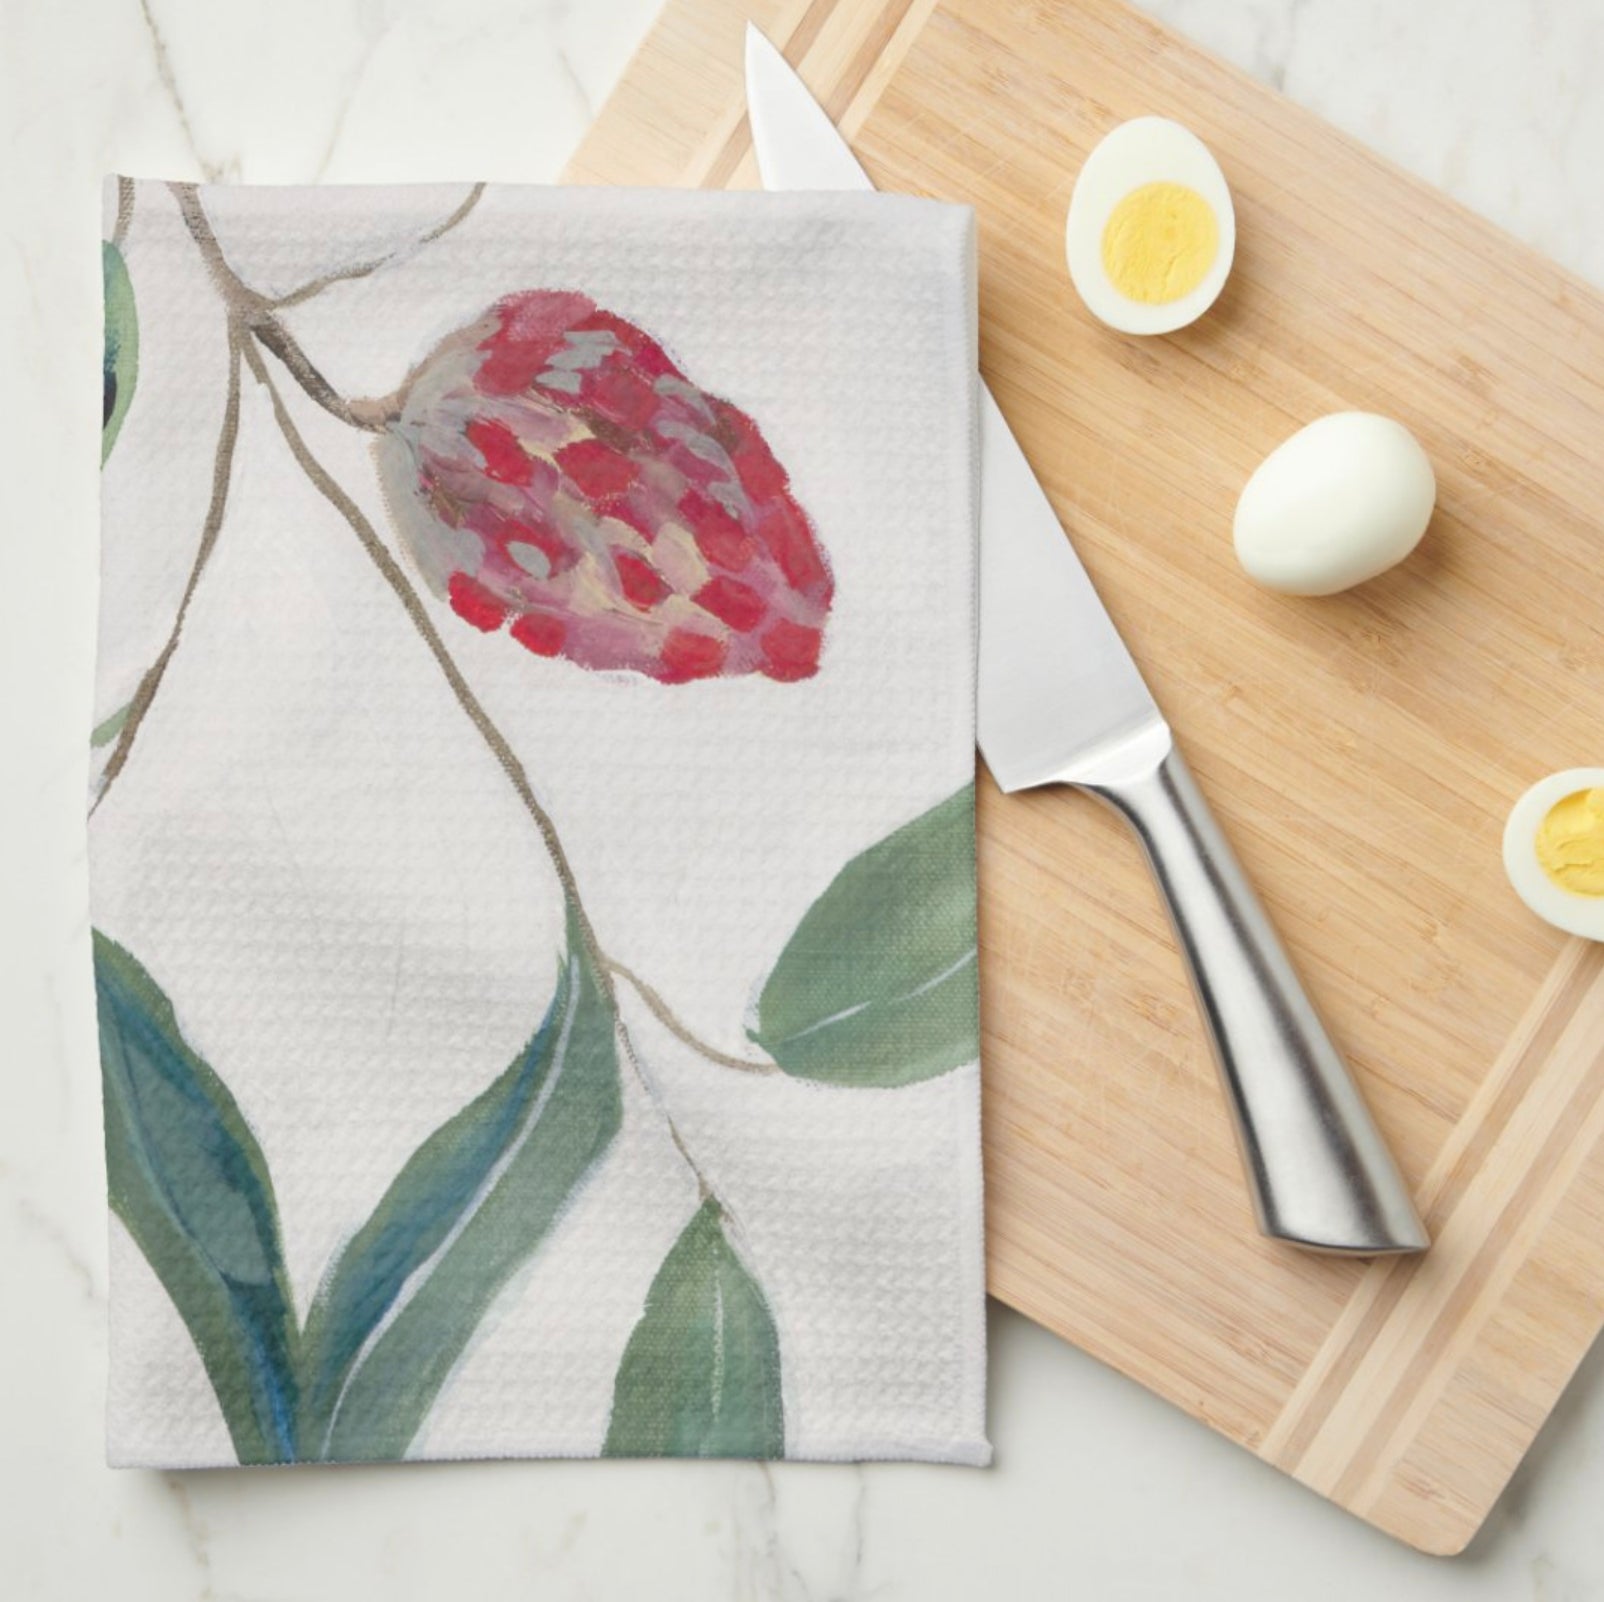 Magnolia Tea Towel - Magnolia